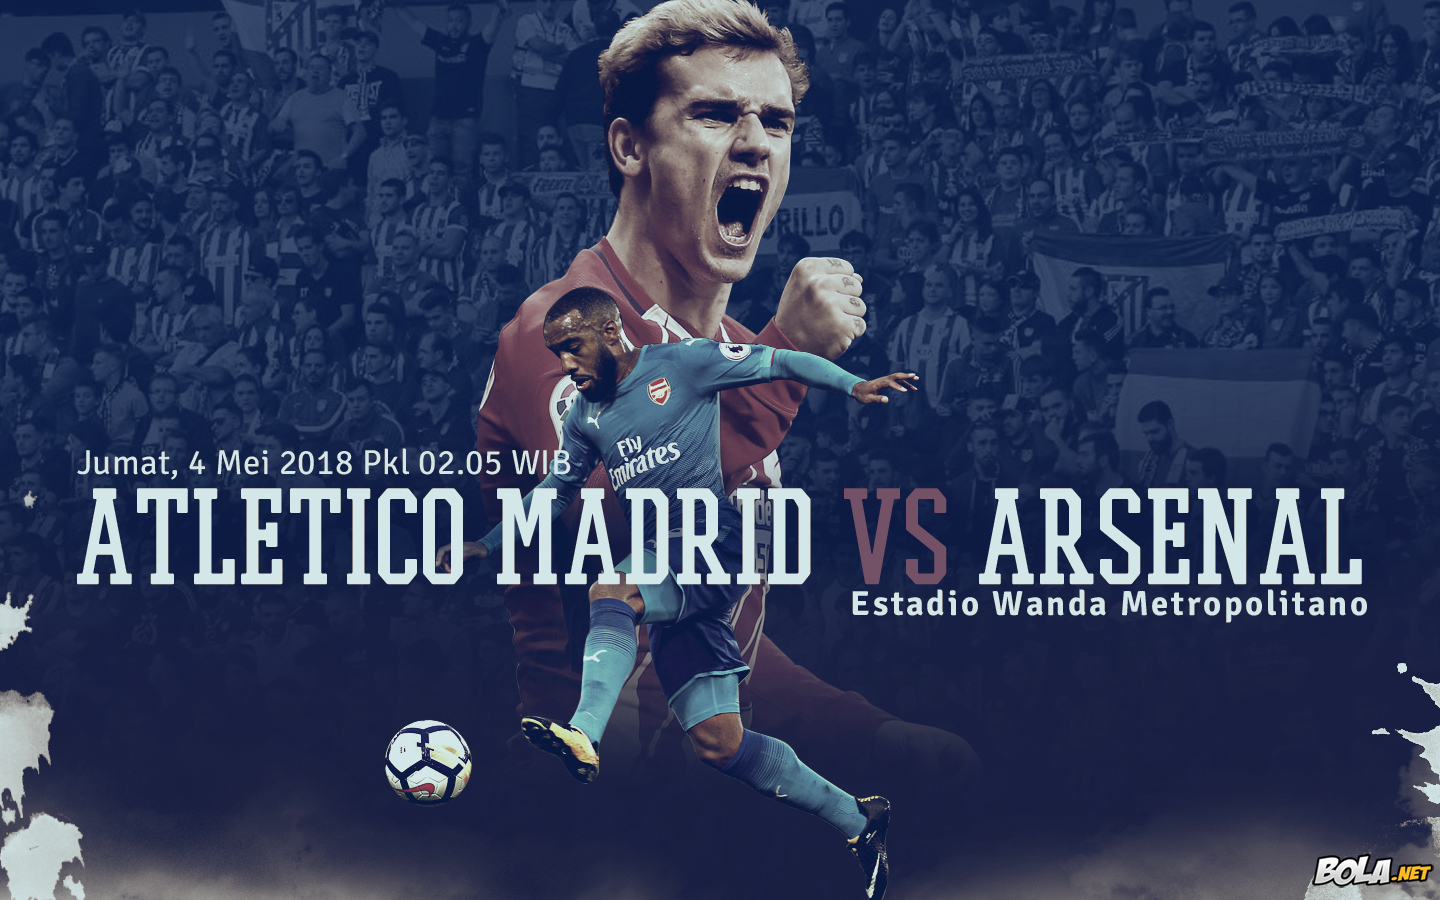 Deskripsi : Wallpaper Atletico Madrid Vs Arsenal, size: 1440x900